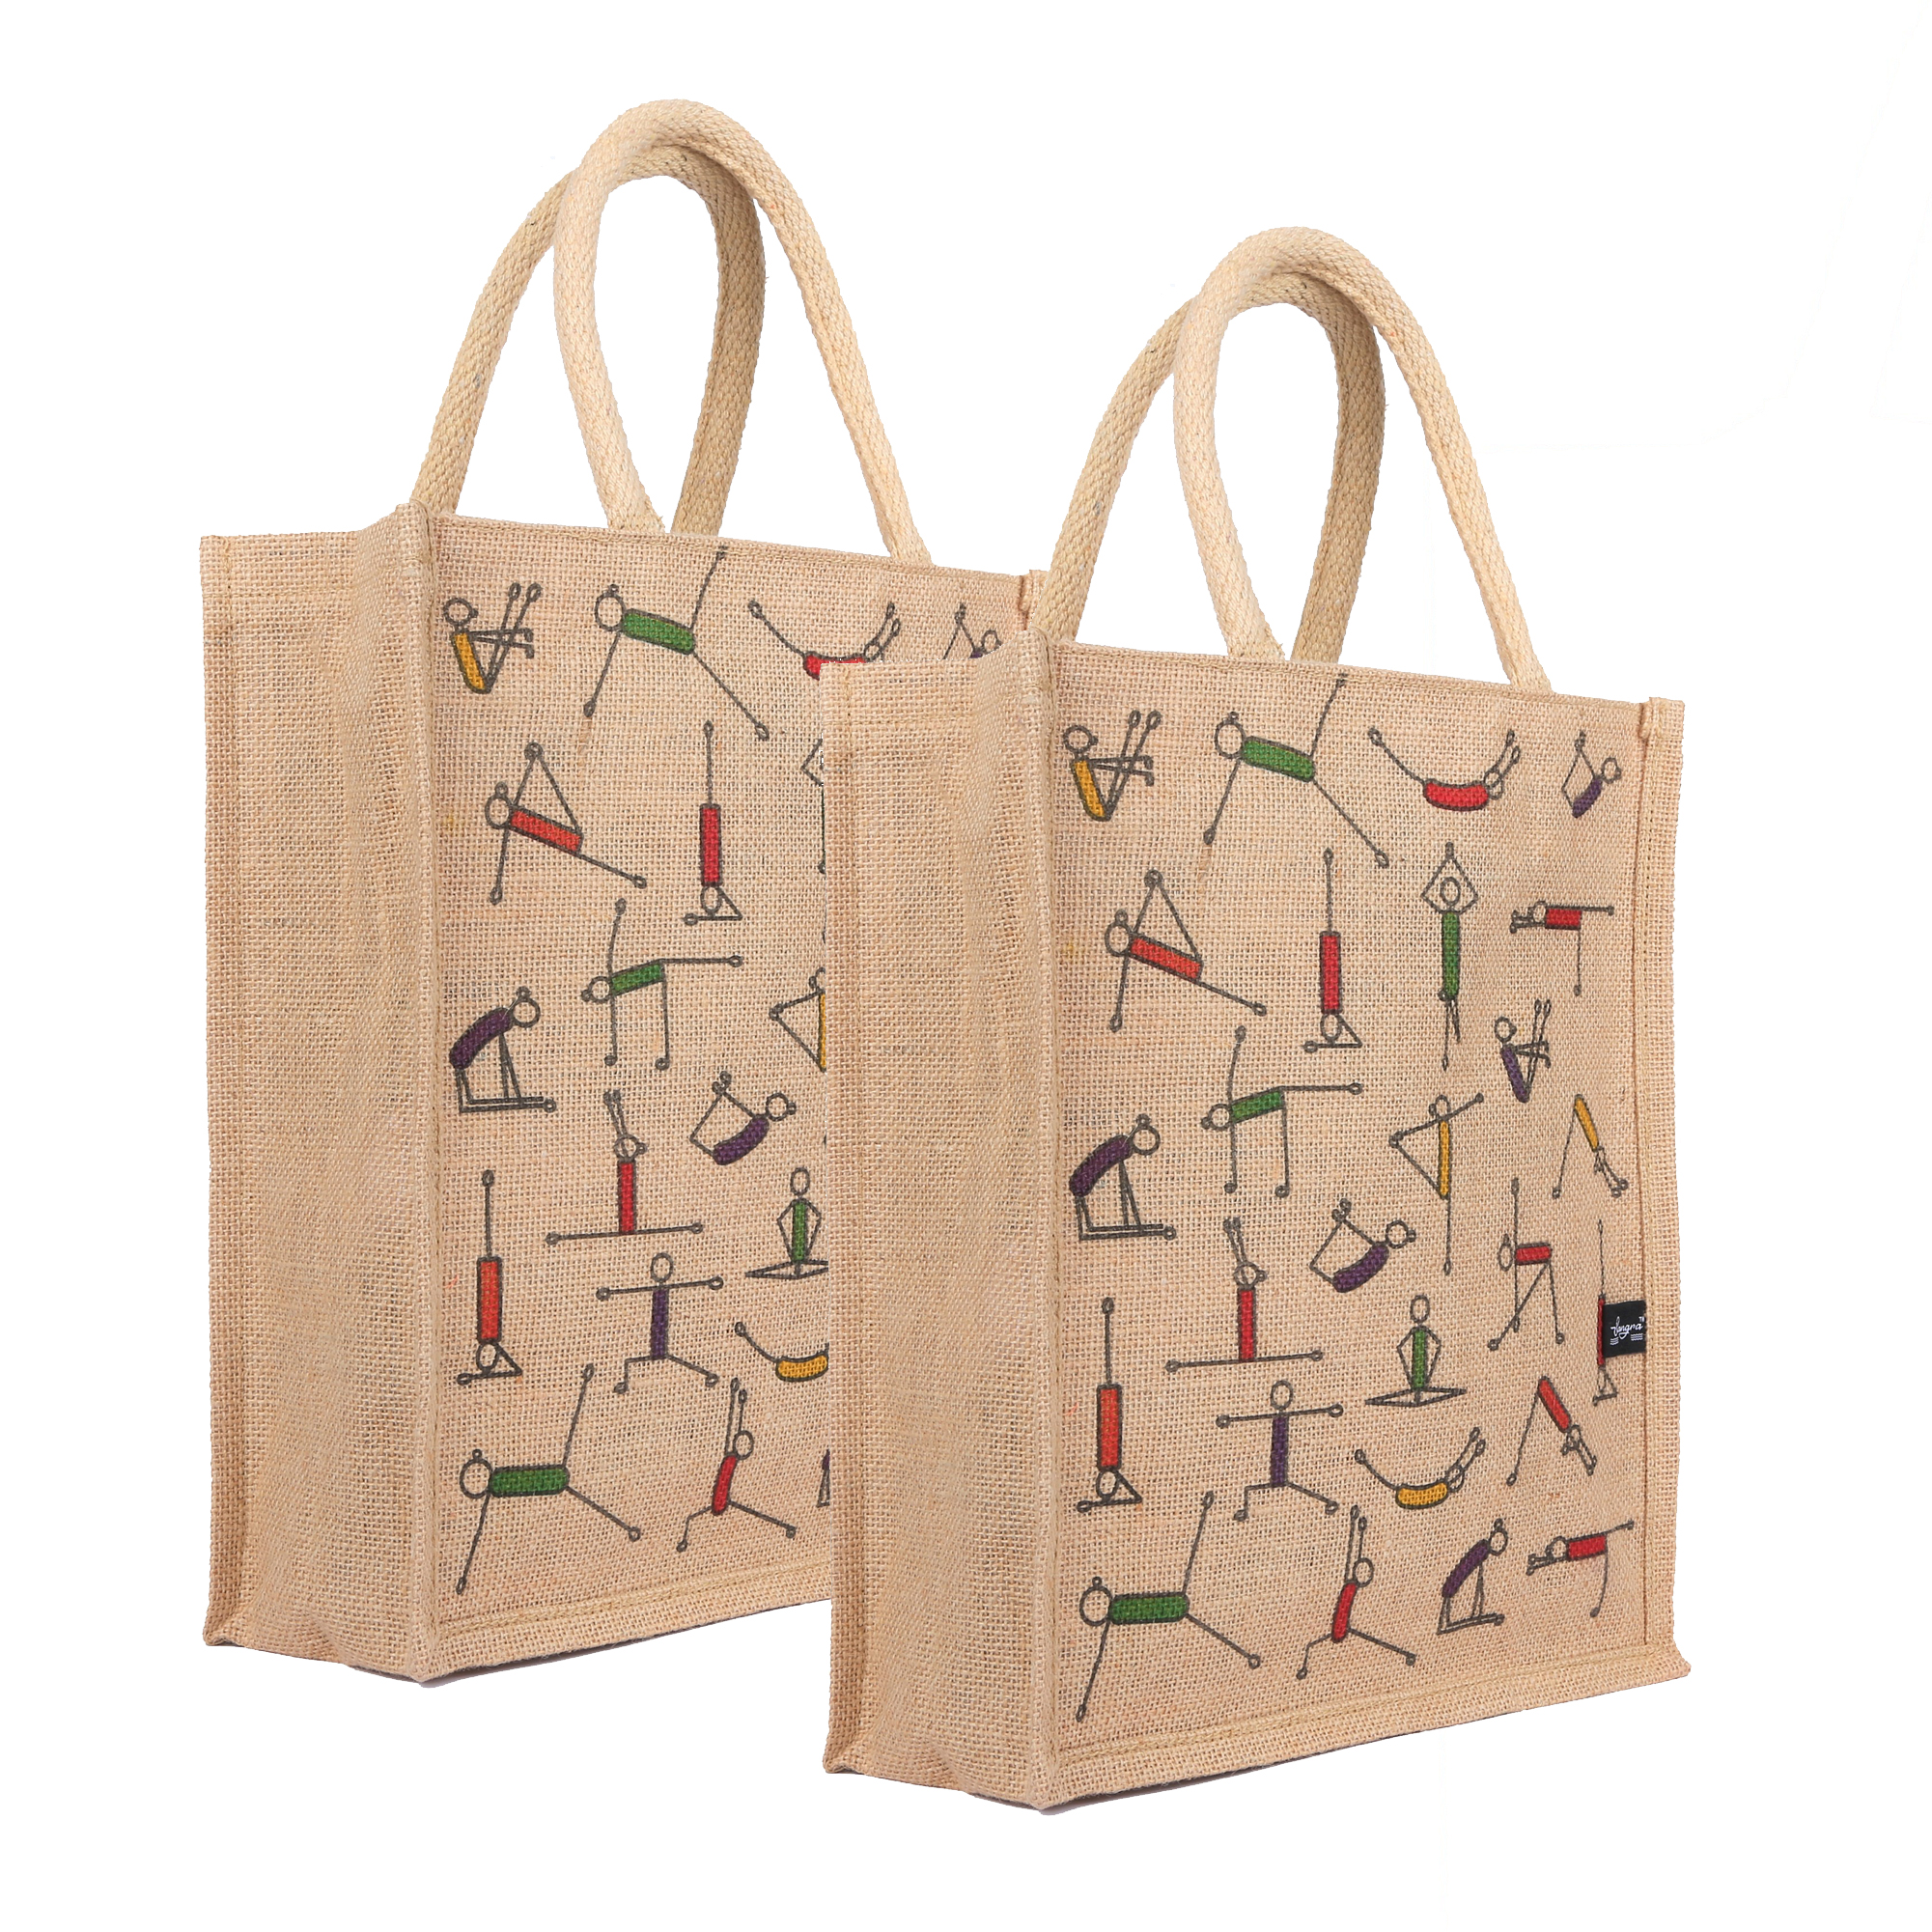 Shop 100% Biodegradable Jute Tote Bags| BannerBuzz US